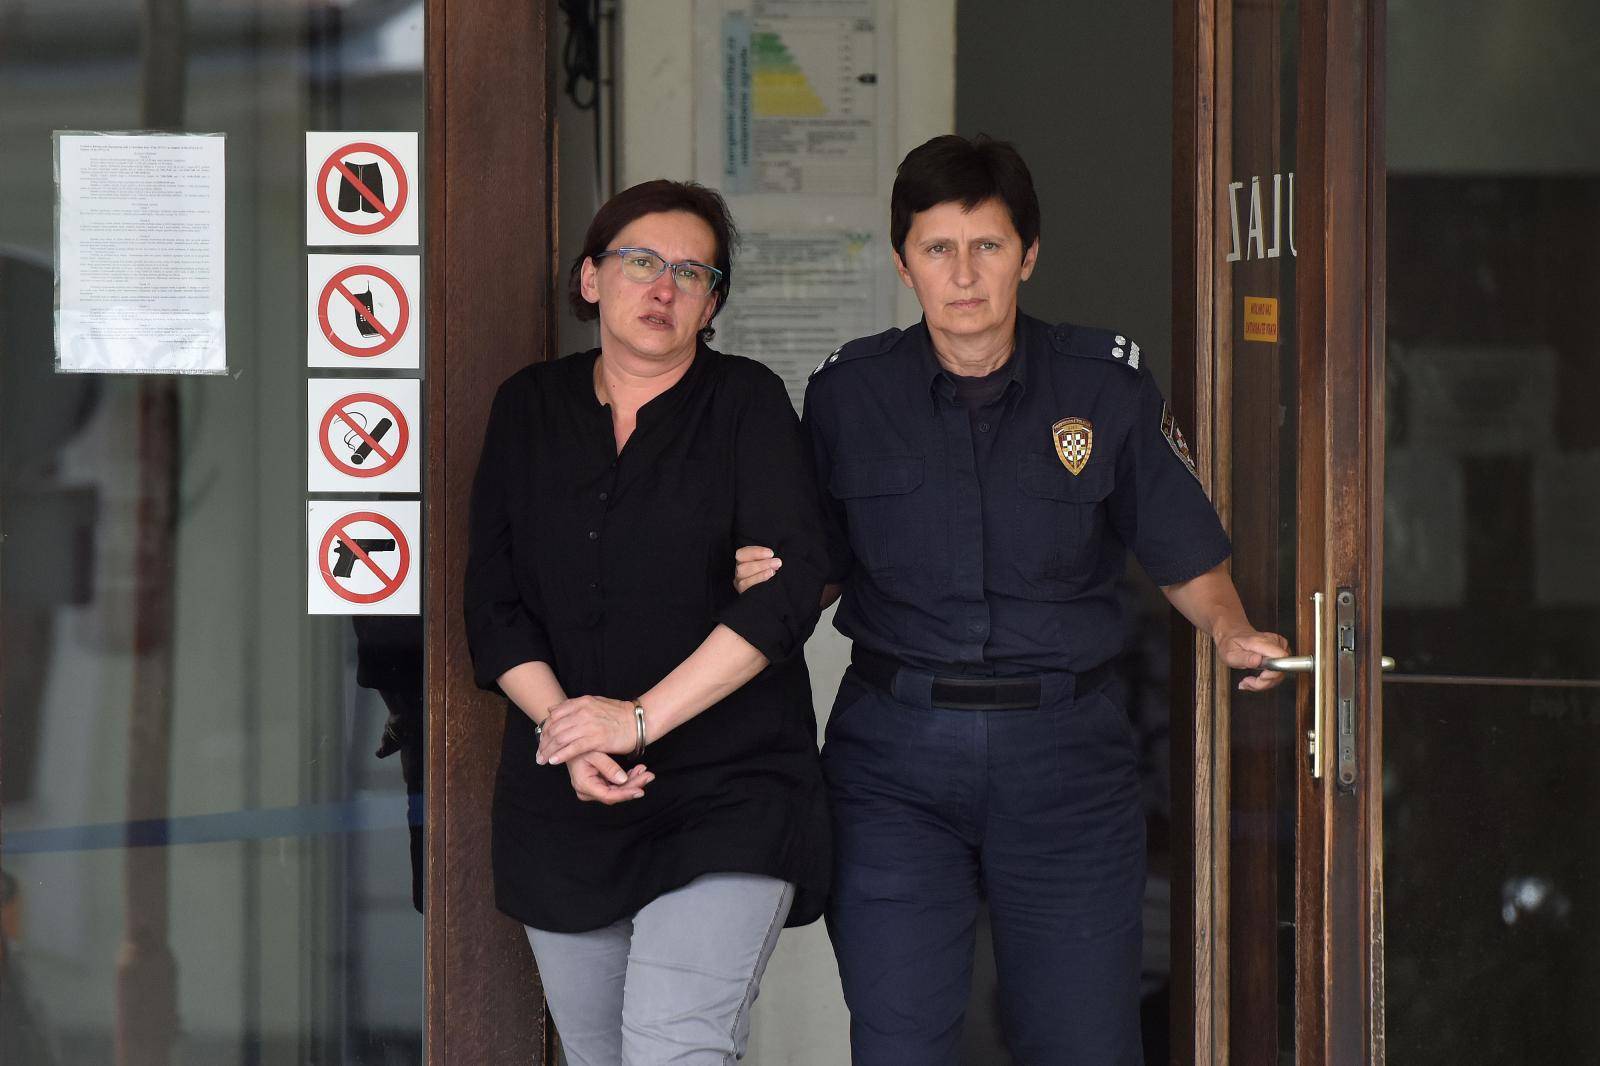 VaraÅ¾din: Smiljana Srnec odlazi iz zgrade suda nakon Å¡to je protiv nje podignuta optuÅ¾nica za ubojstvo sestre